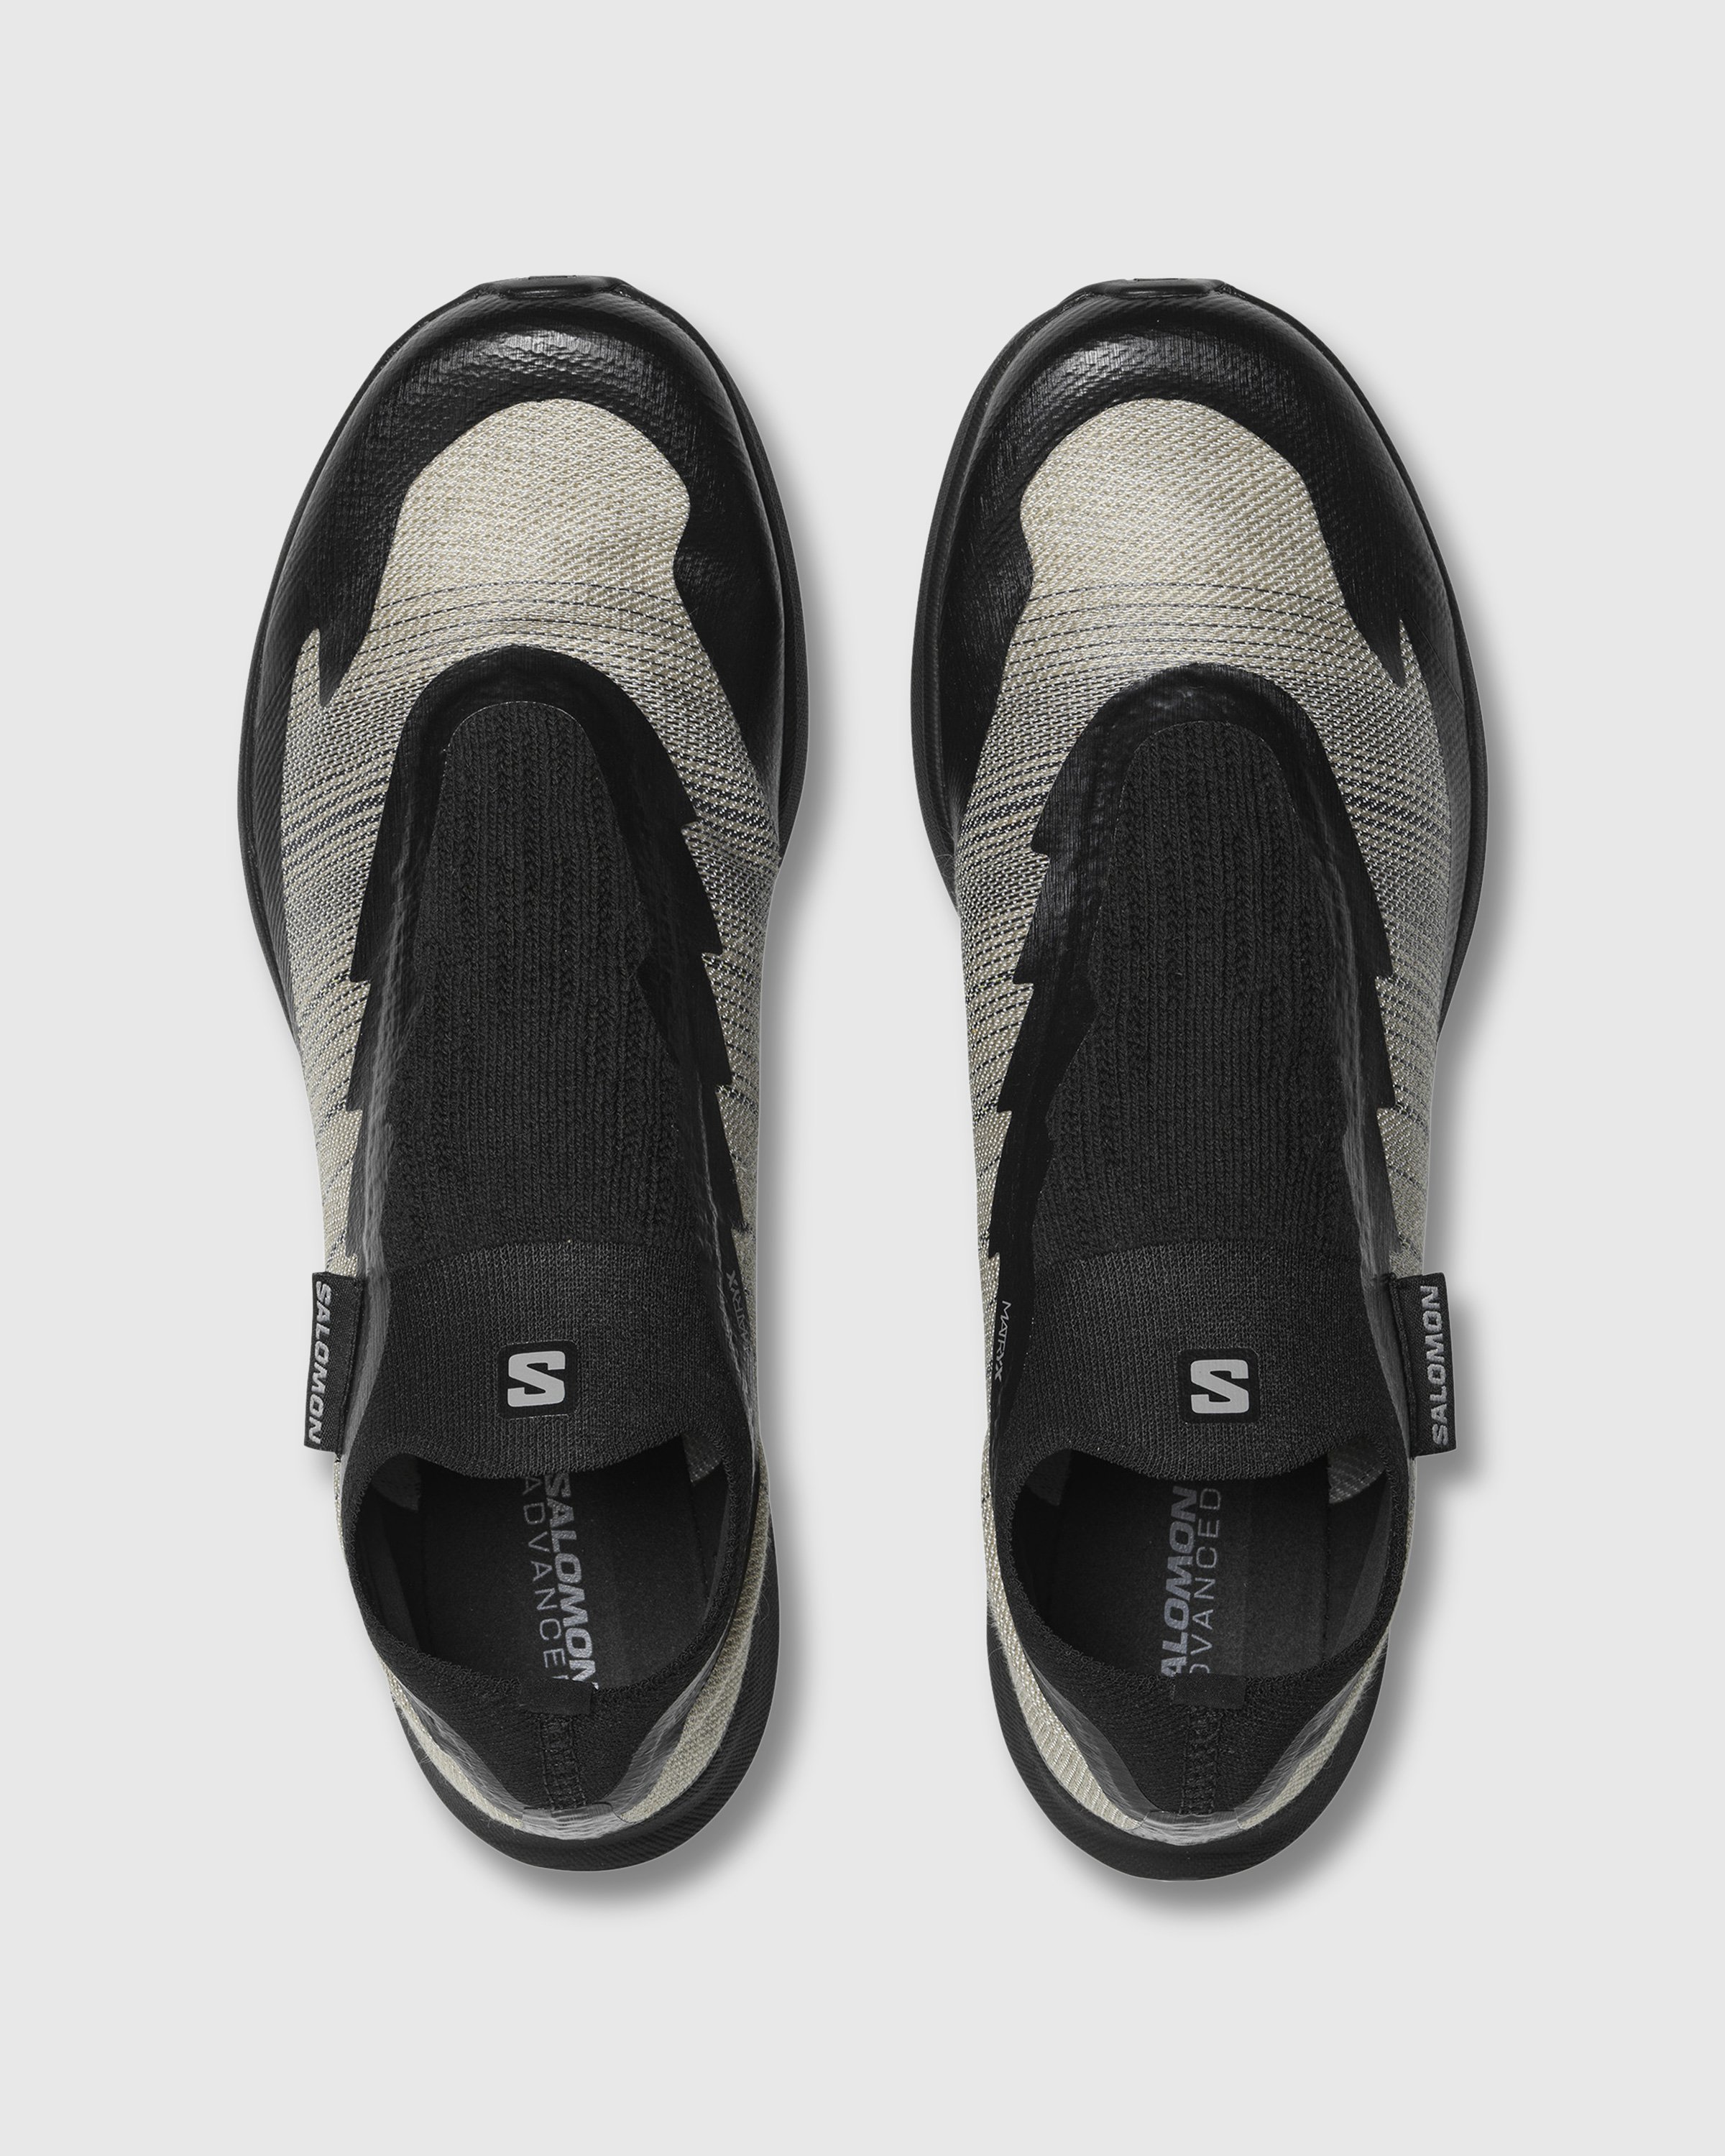 Salomon - PULSAR ADVANCED Black/Black/Pewter - Footwear - Black - Image 4